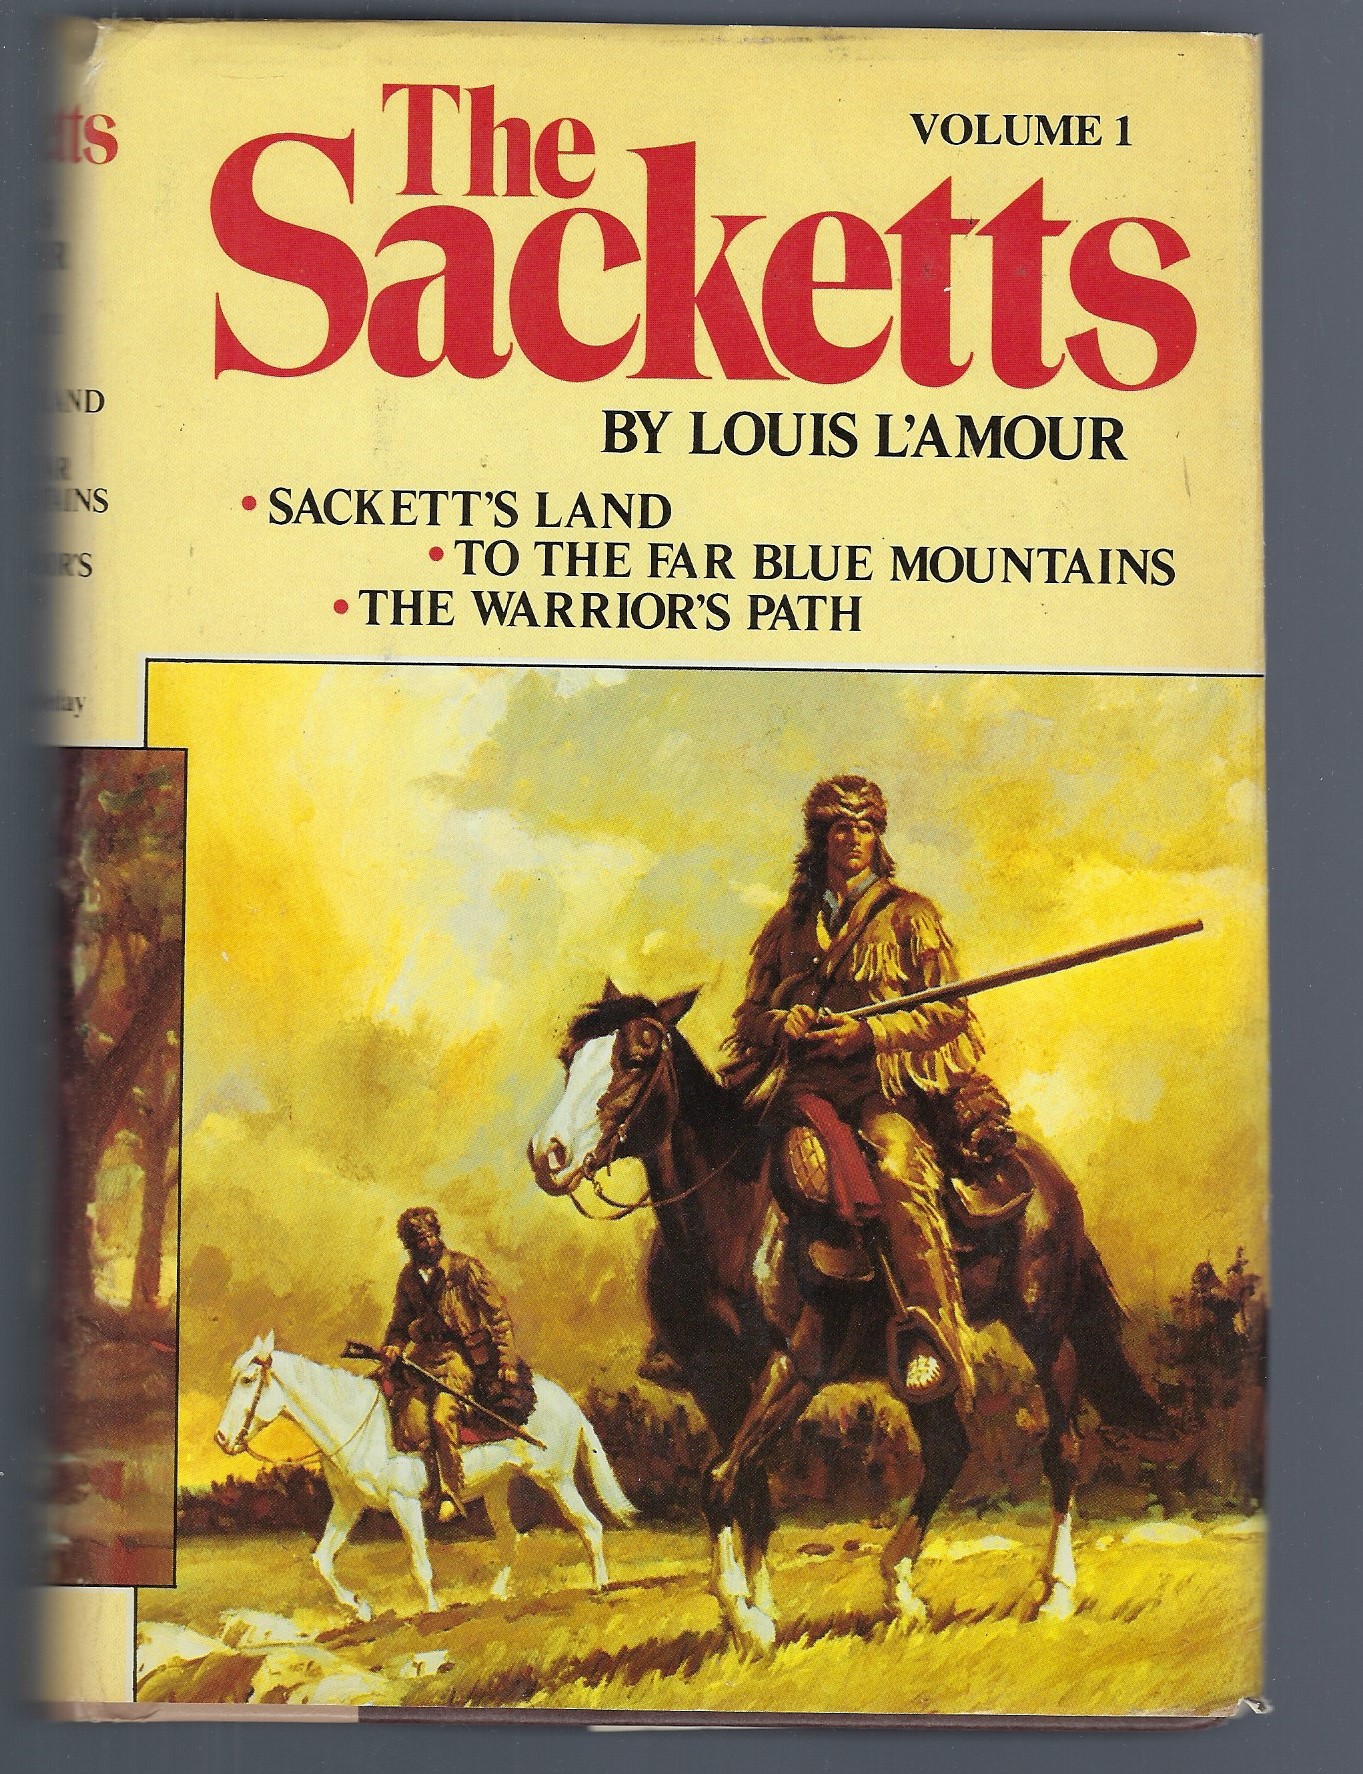 To the Far Blue Mountains: The Sacketts